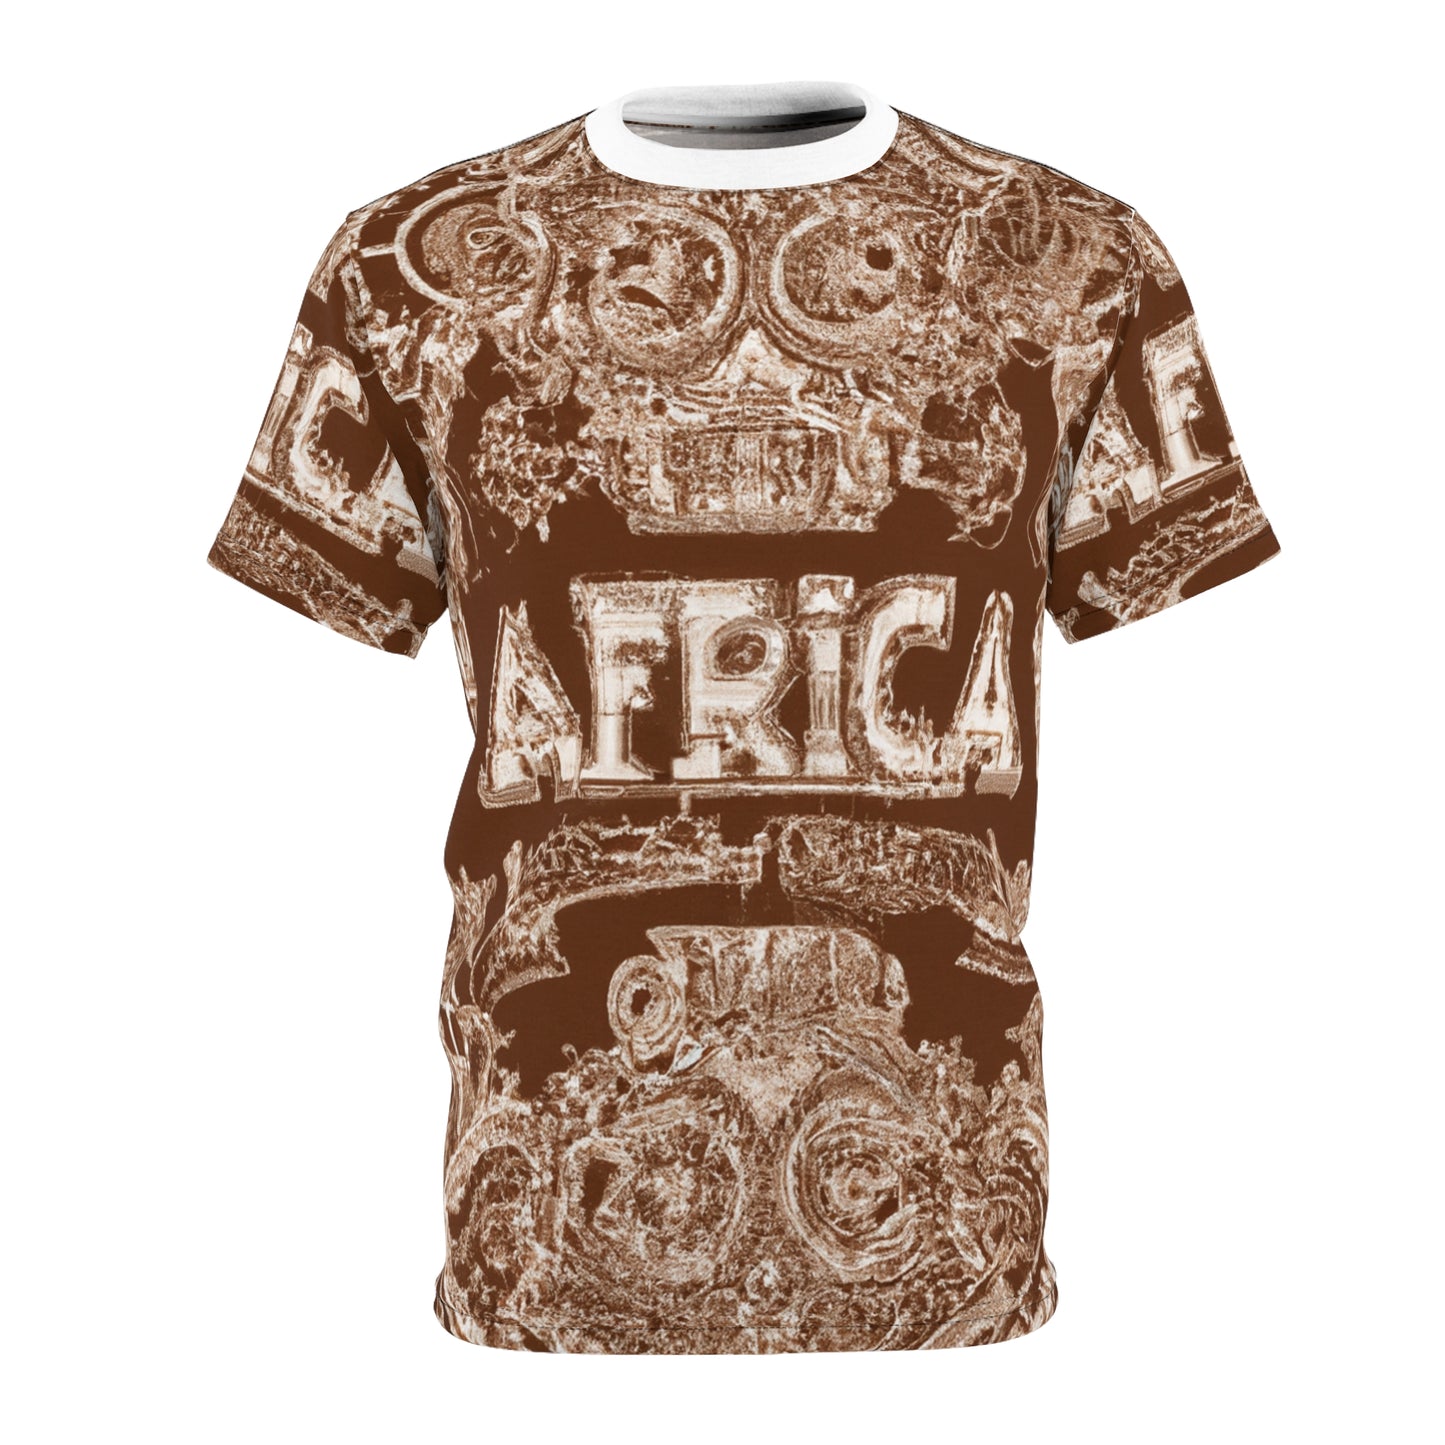 Vintage Africa Shirt